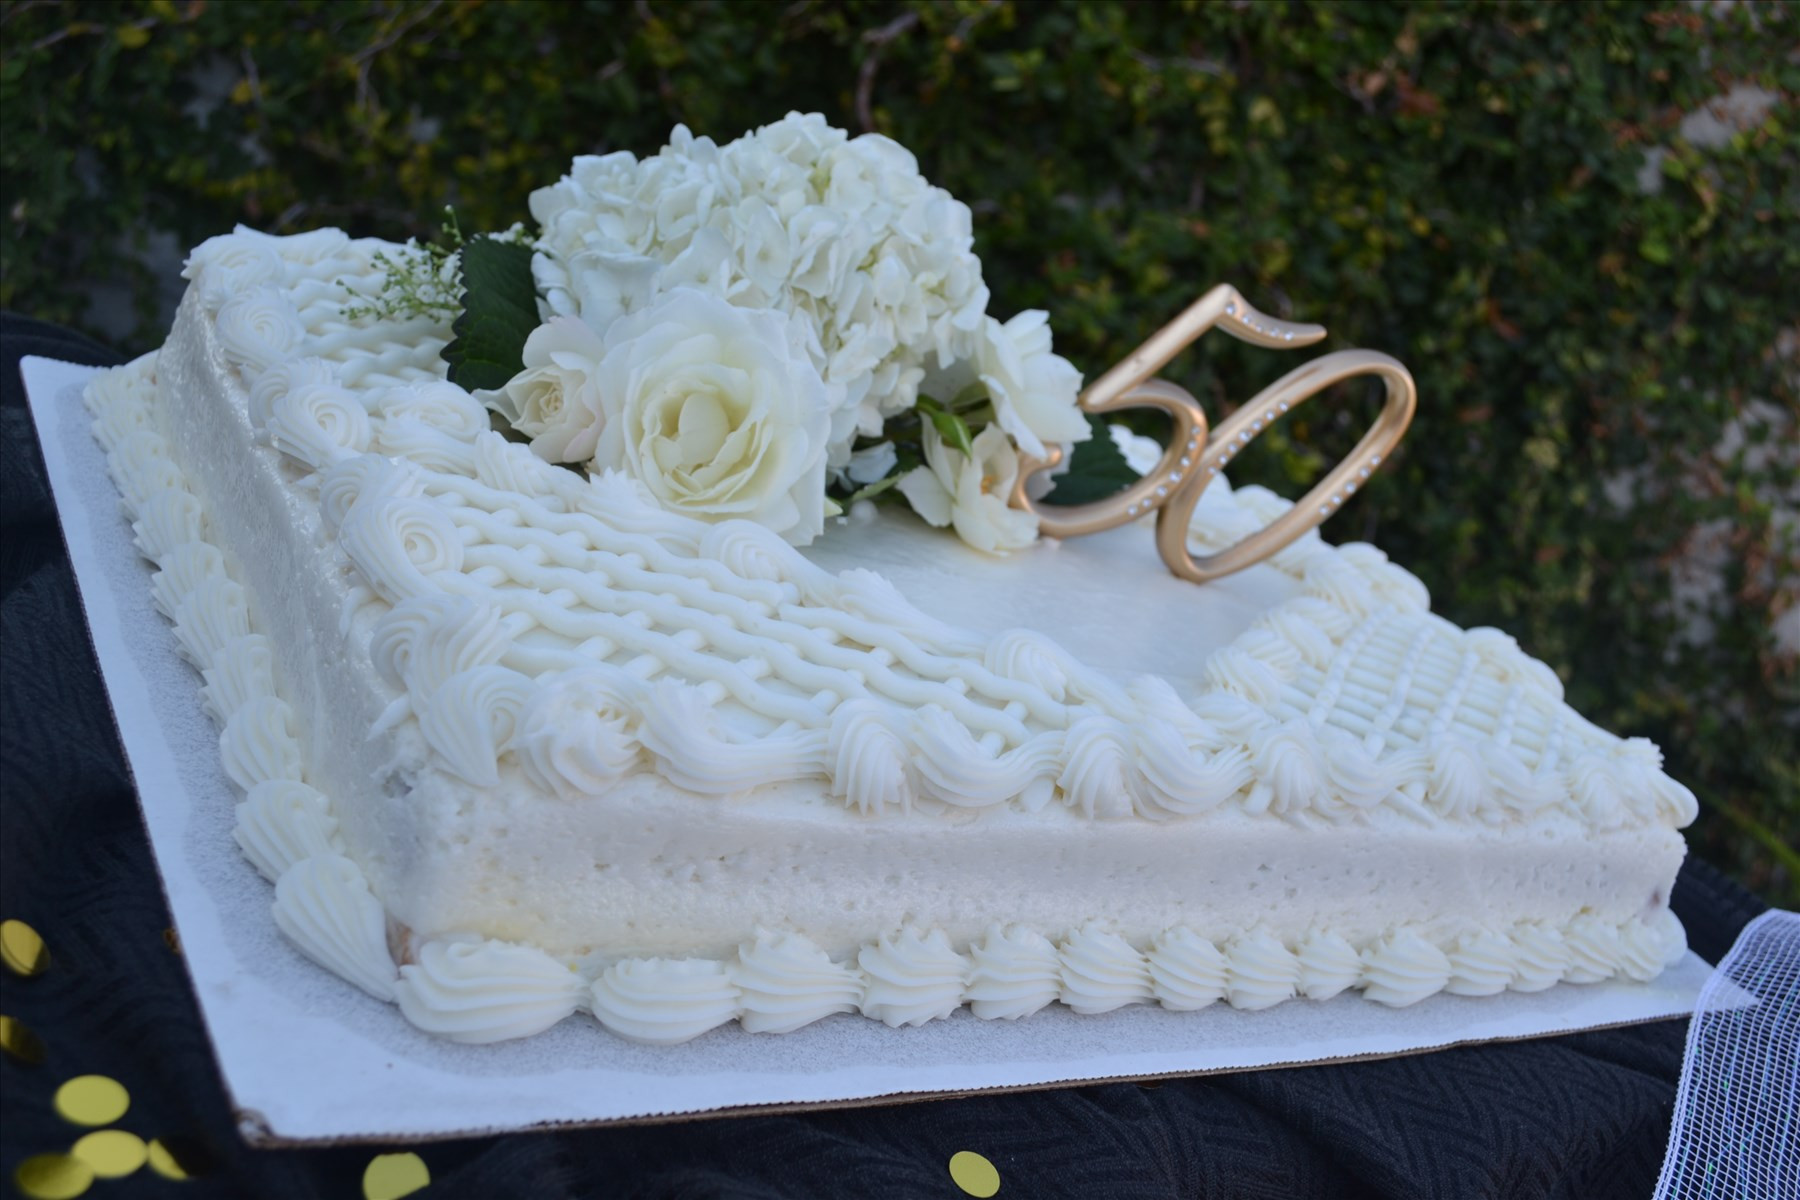 Wedding Cakes From Costco
 Costco wedding cakes idea in 2017